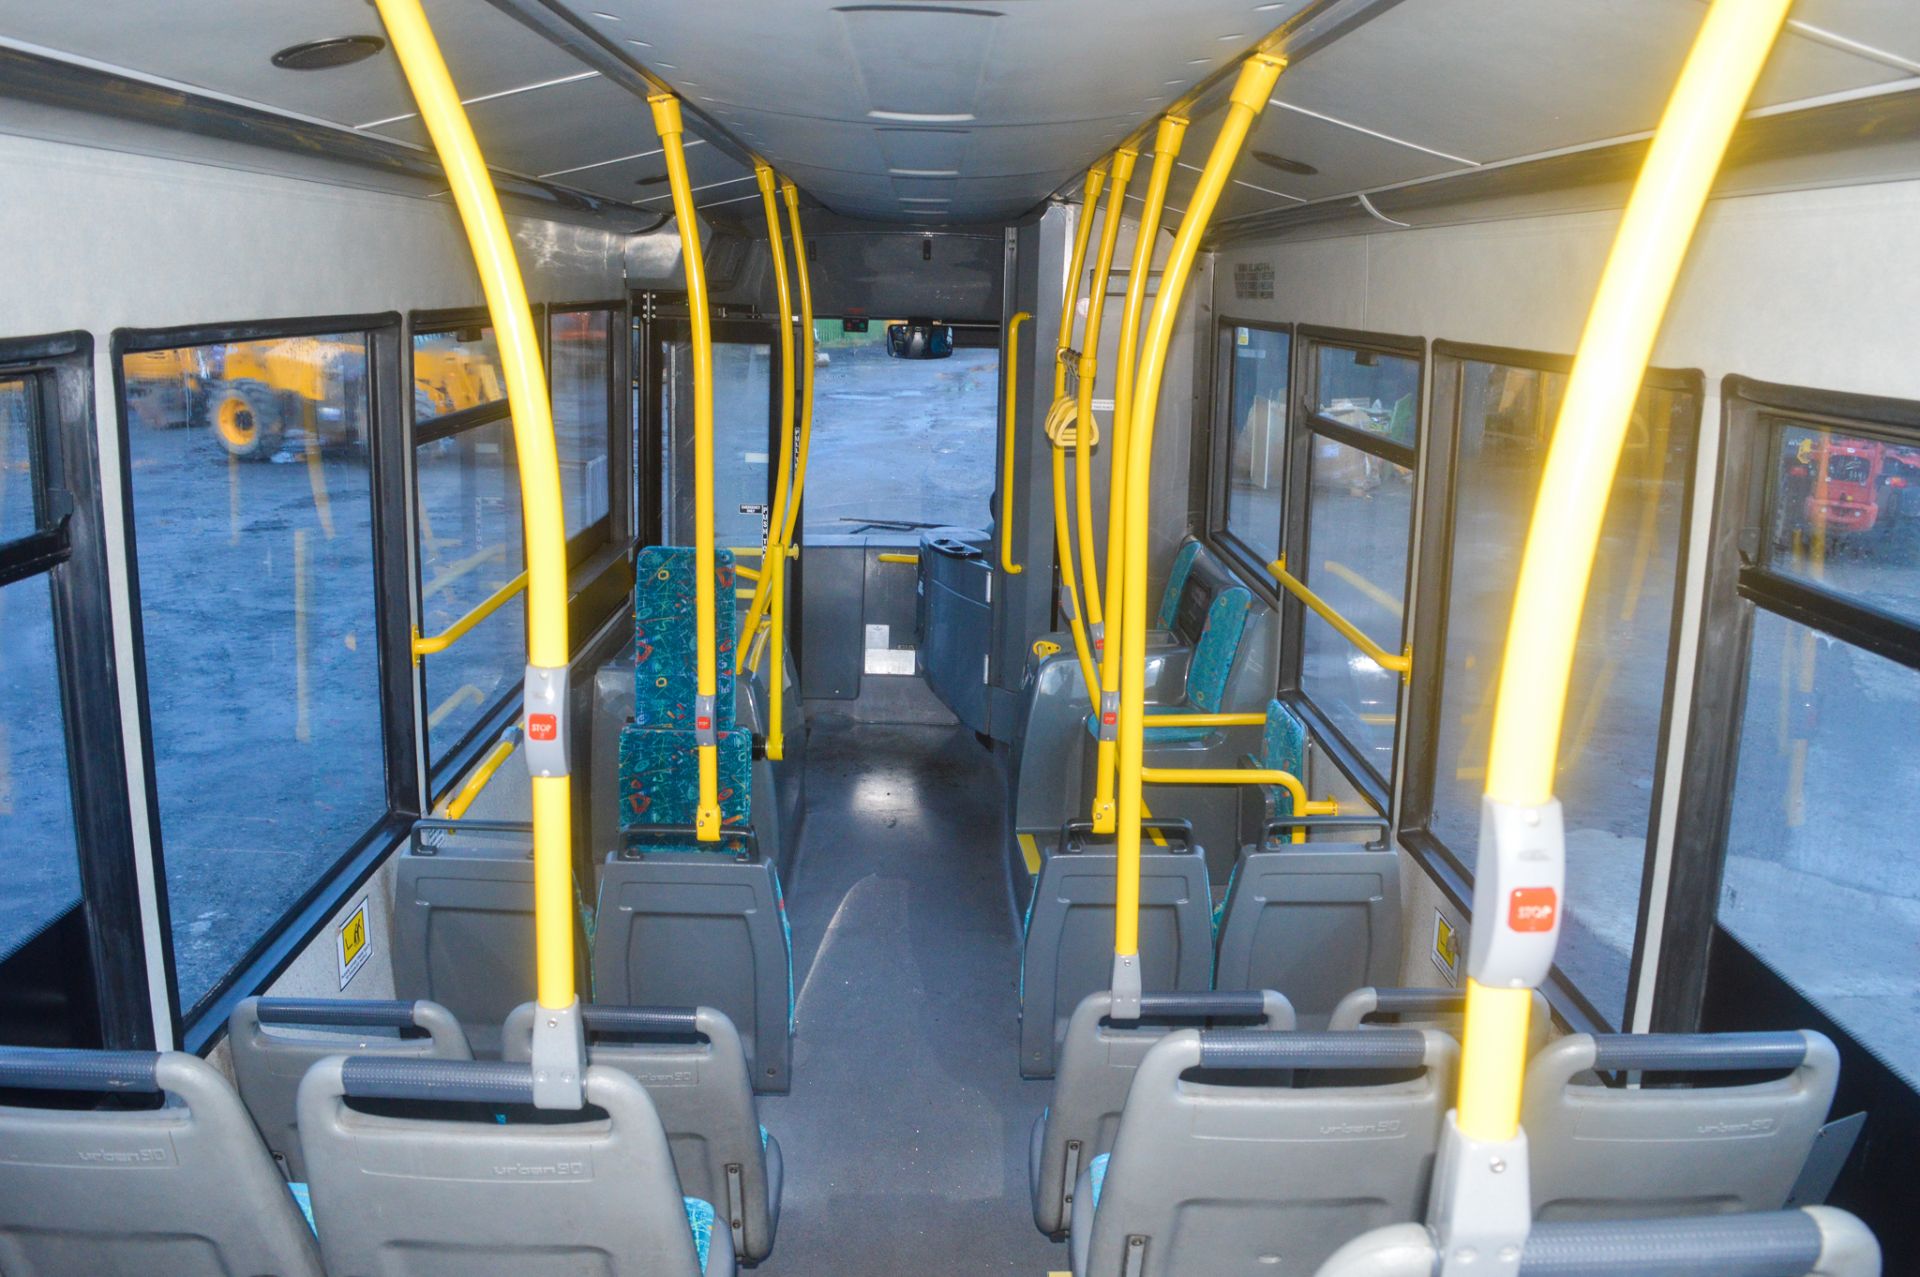 Alexander Dennis Dart 4 Enviro 2000 29 seat single deck service bus Registration Number: WX09 TCK - Image 8 of 10